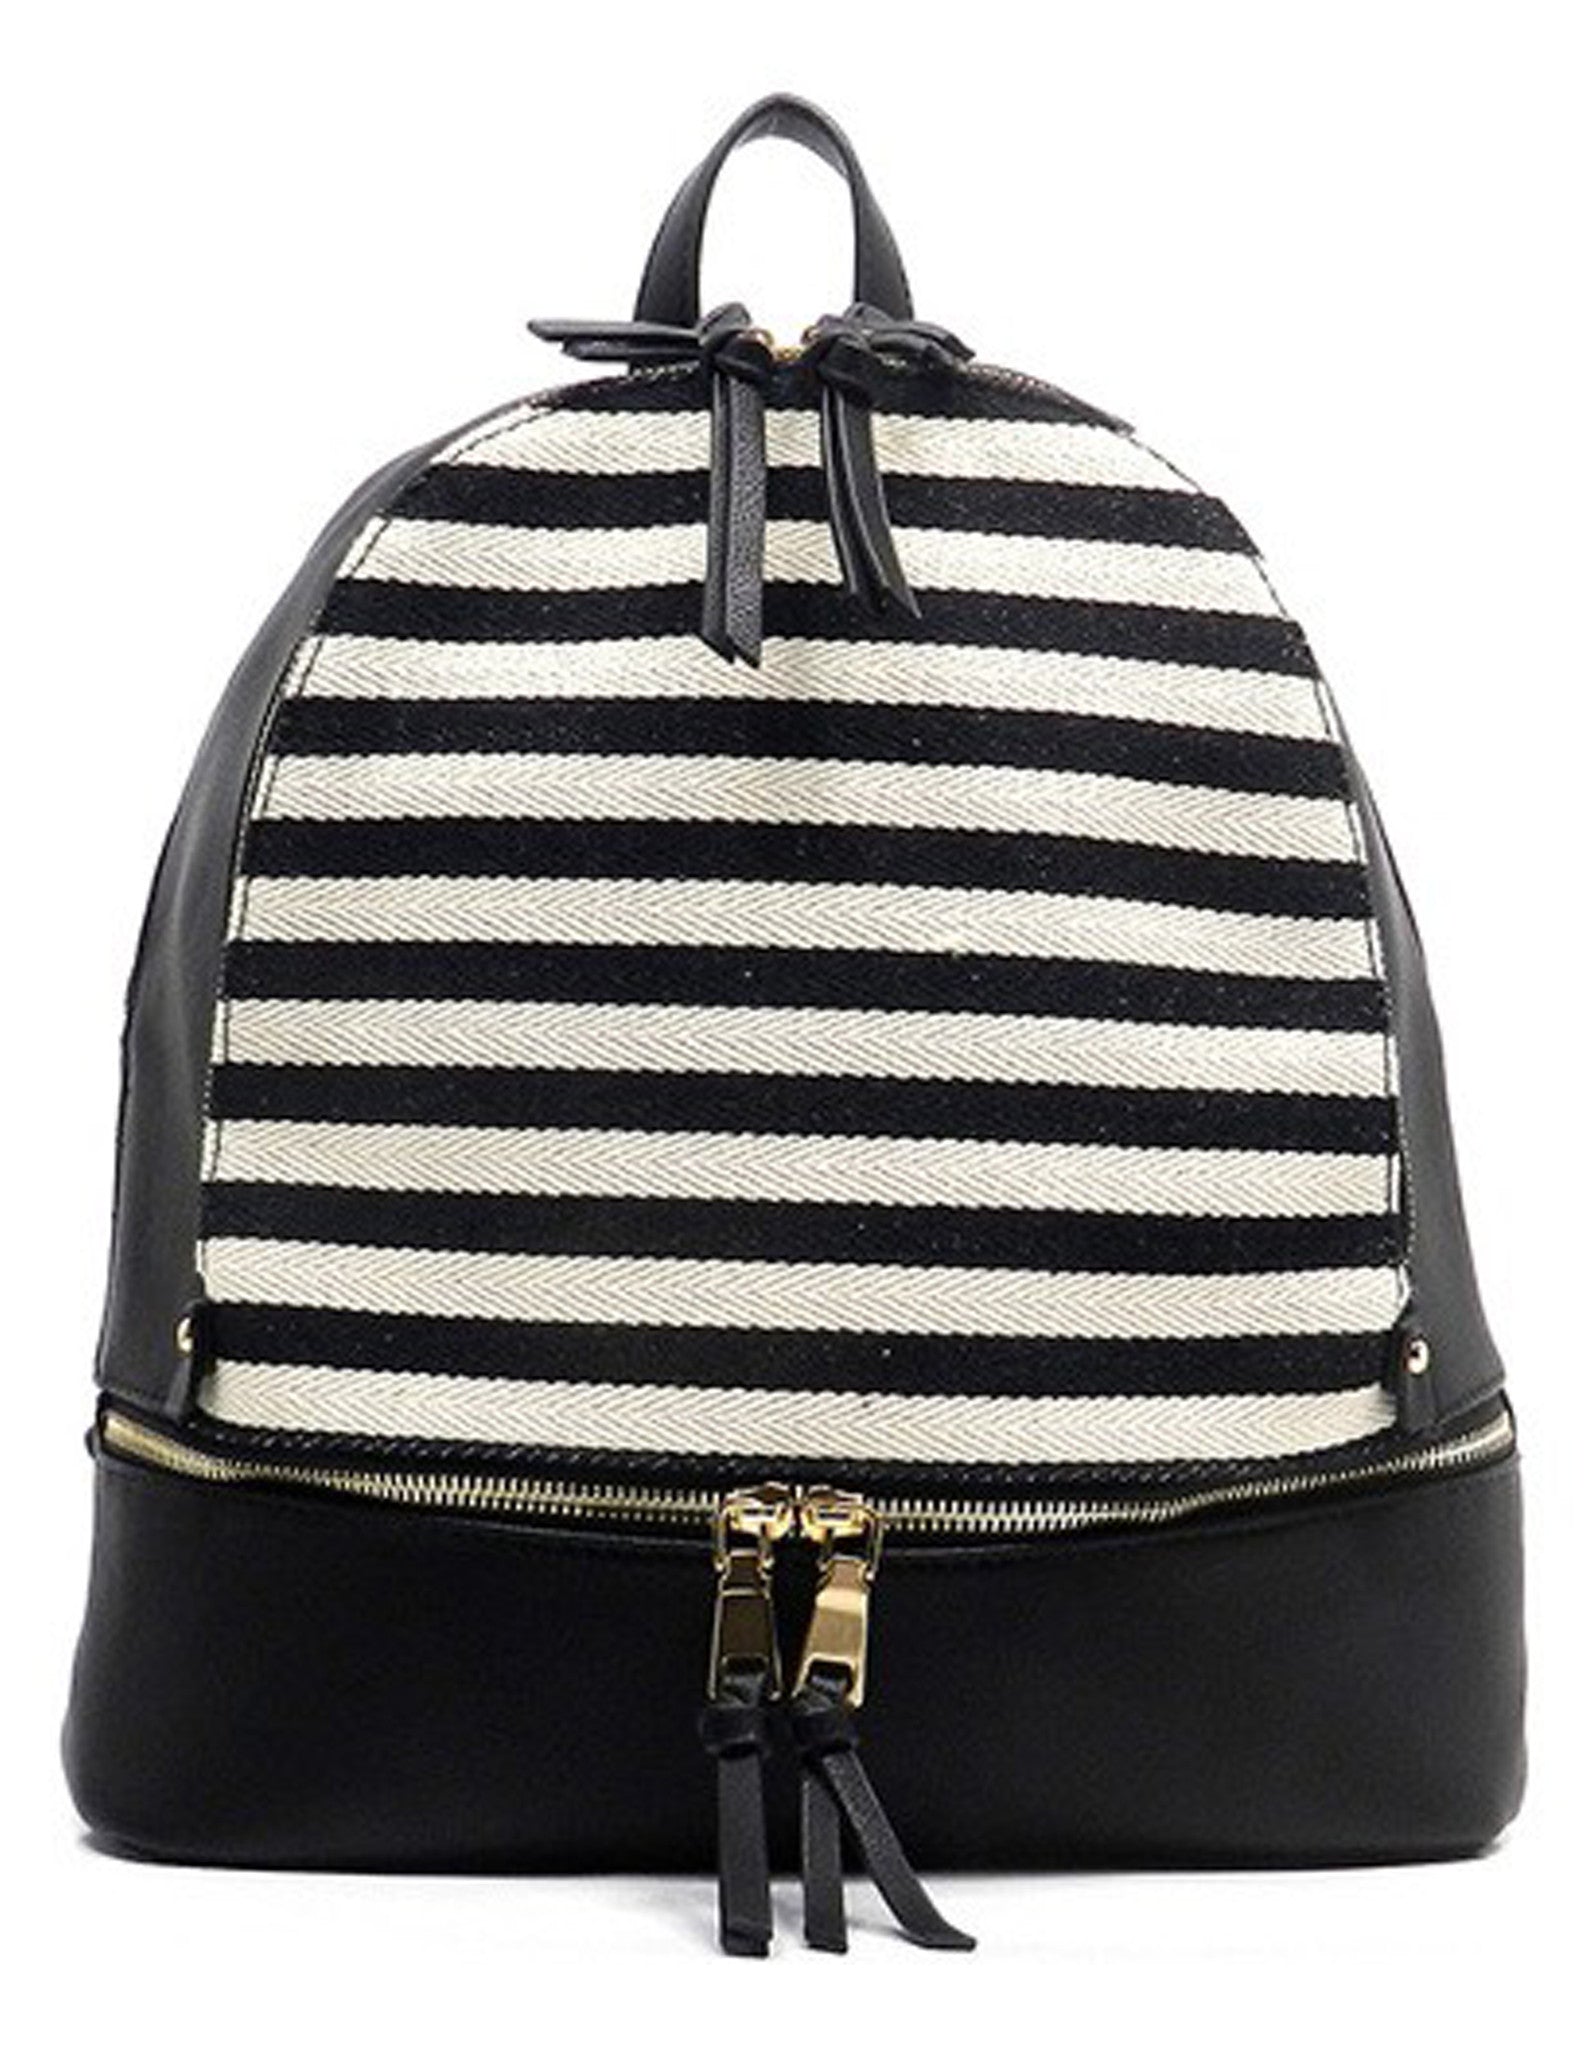 Fashion Elegant Black Backpack with Striped Patterns